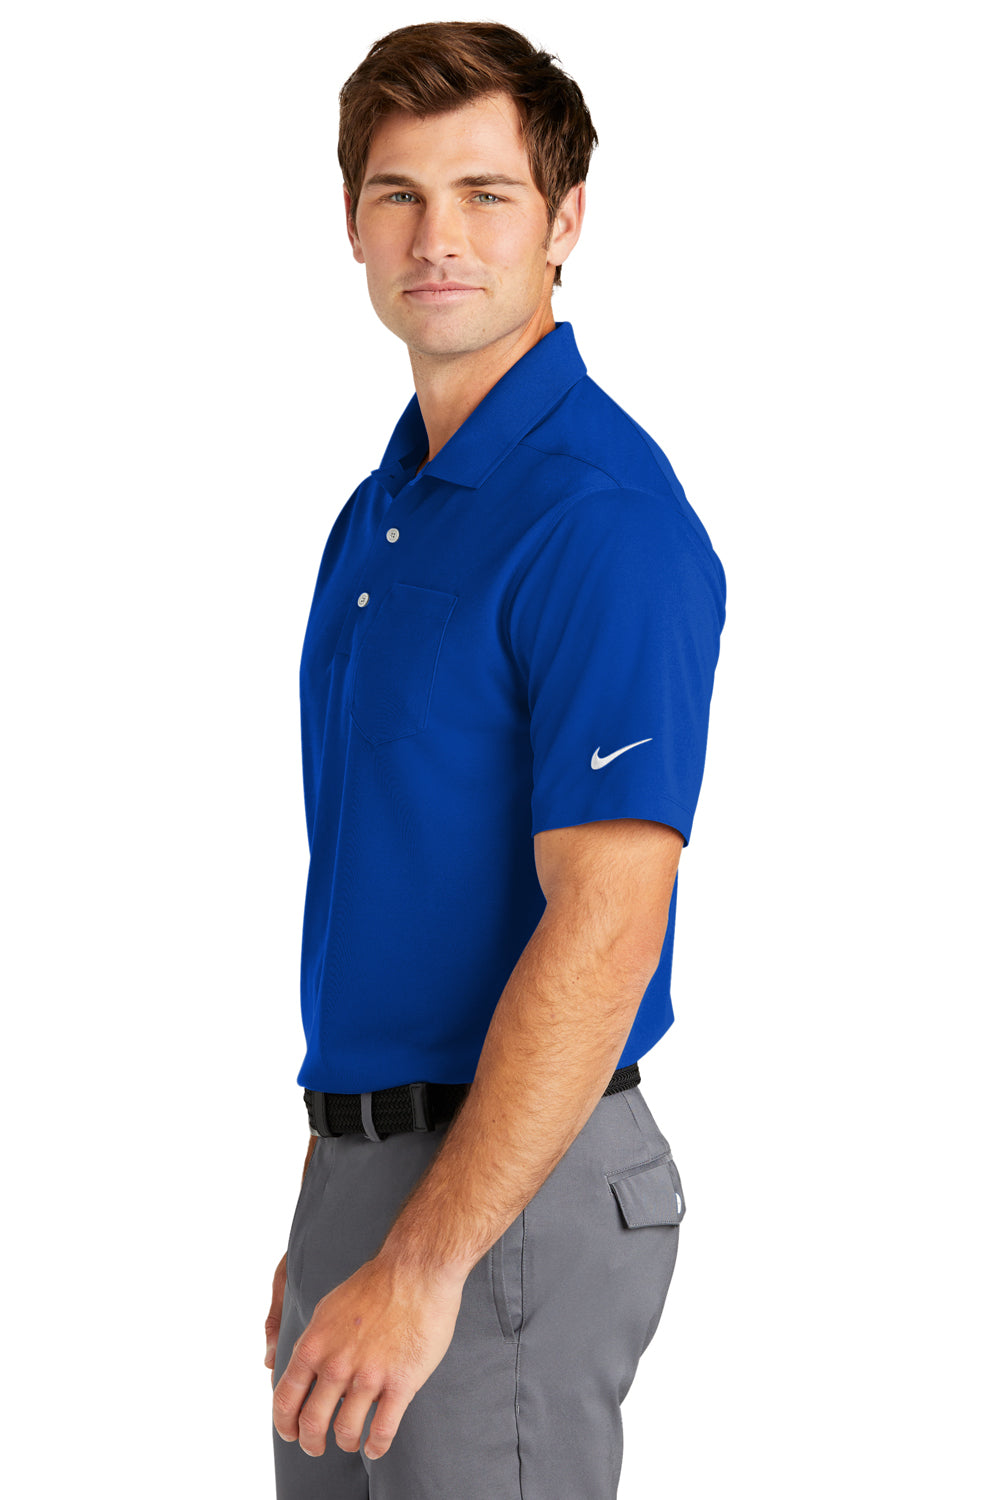 Nike NKDC2103 Mens Dri-Fit Moisture Wicking Micro Pique 2.0 Short Sleeve Polo Shirt w/ Pocket Game Royal Blue Model Side